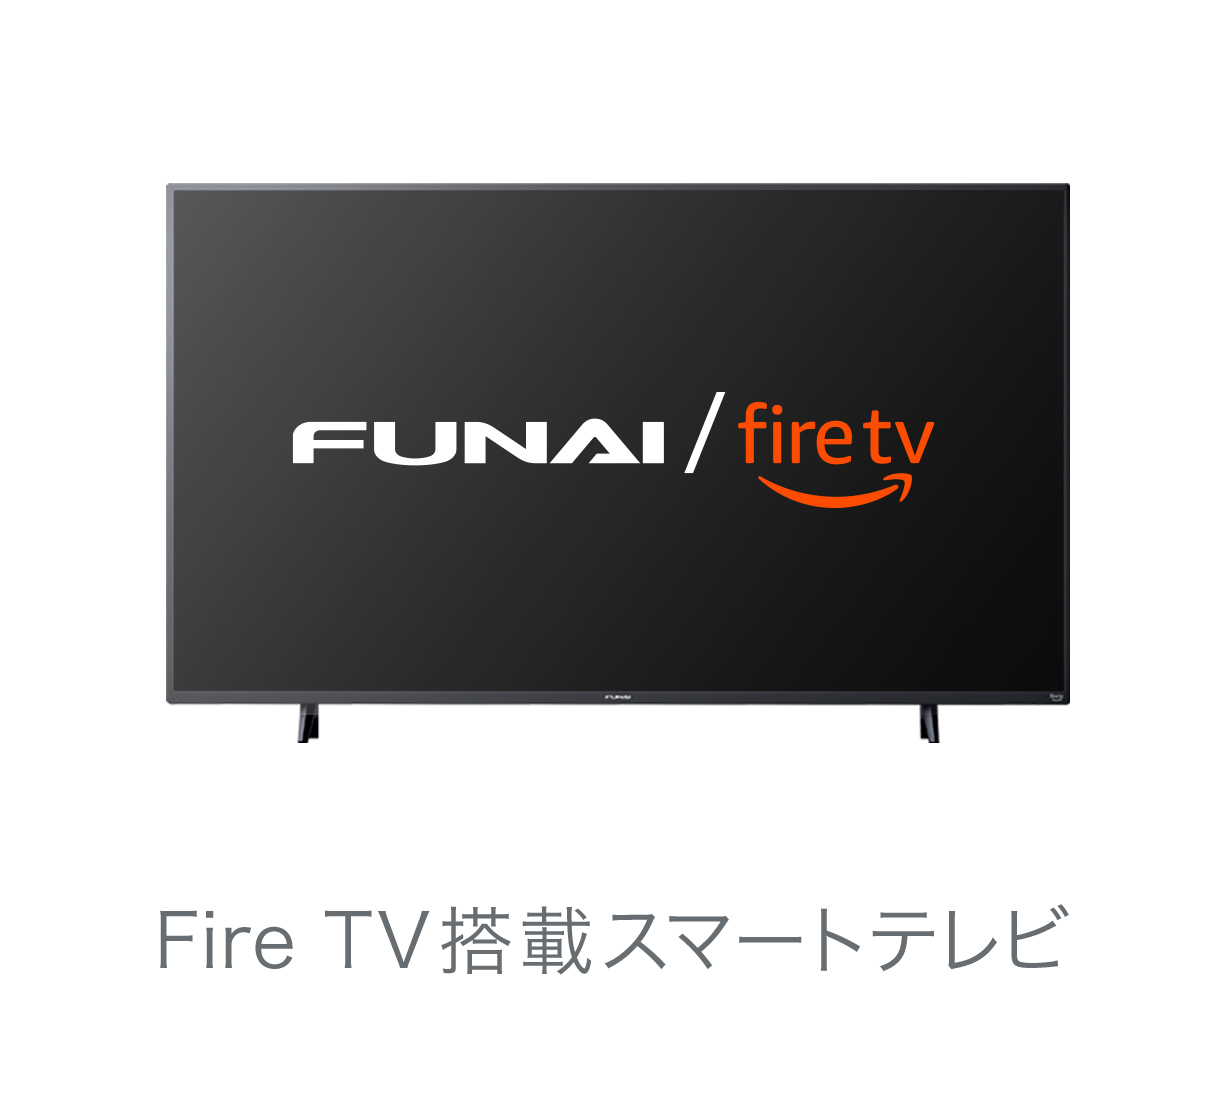 Fire TV製品情報サイト